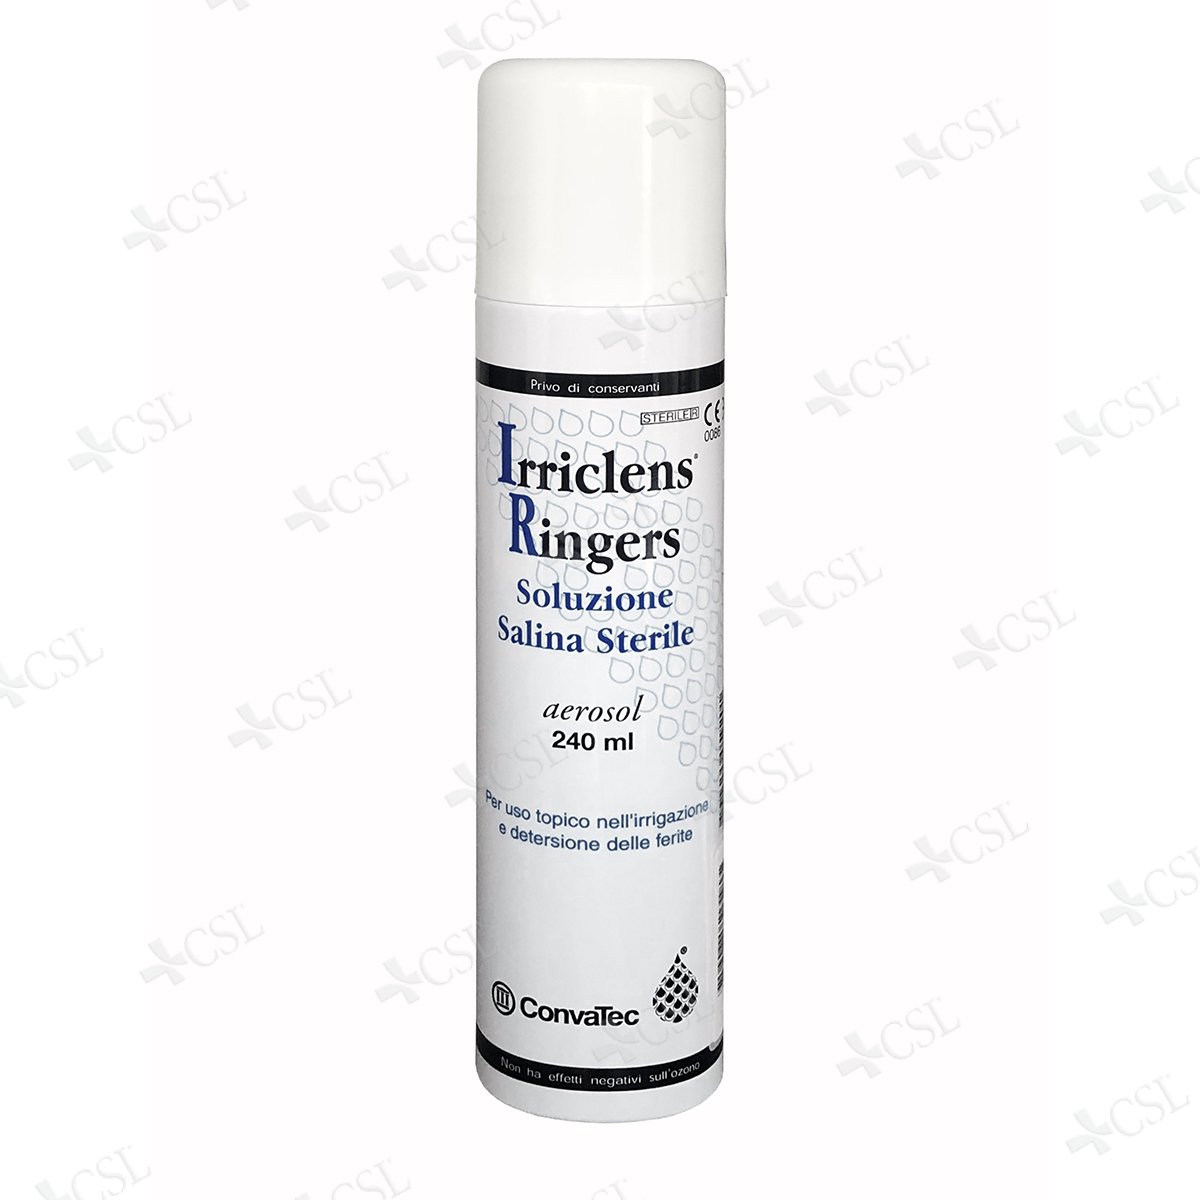 Irriclens® Ringers Soluzione Salina Sterile 240 ml